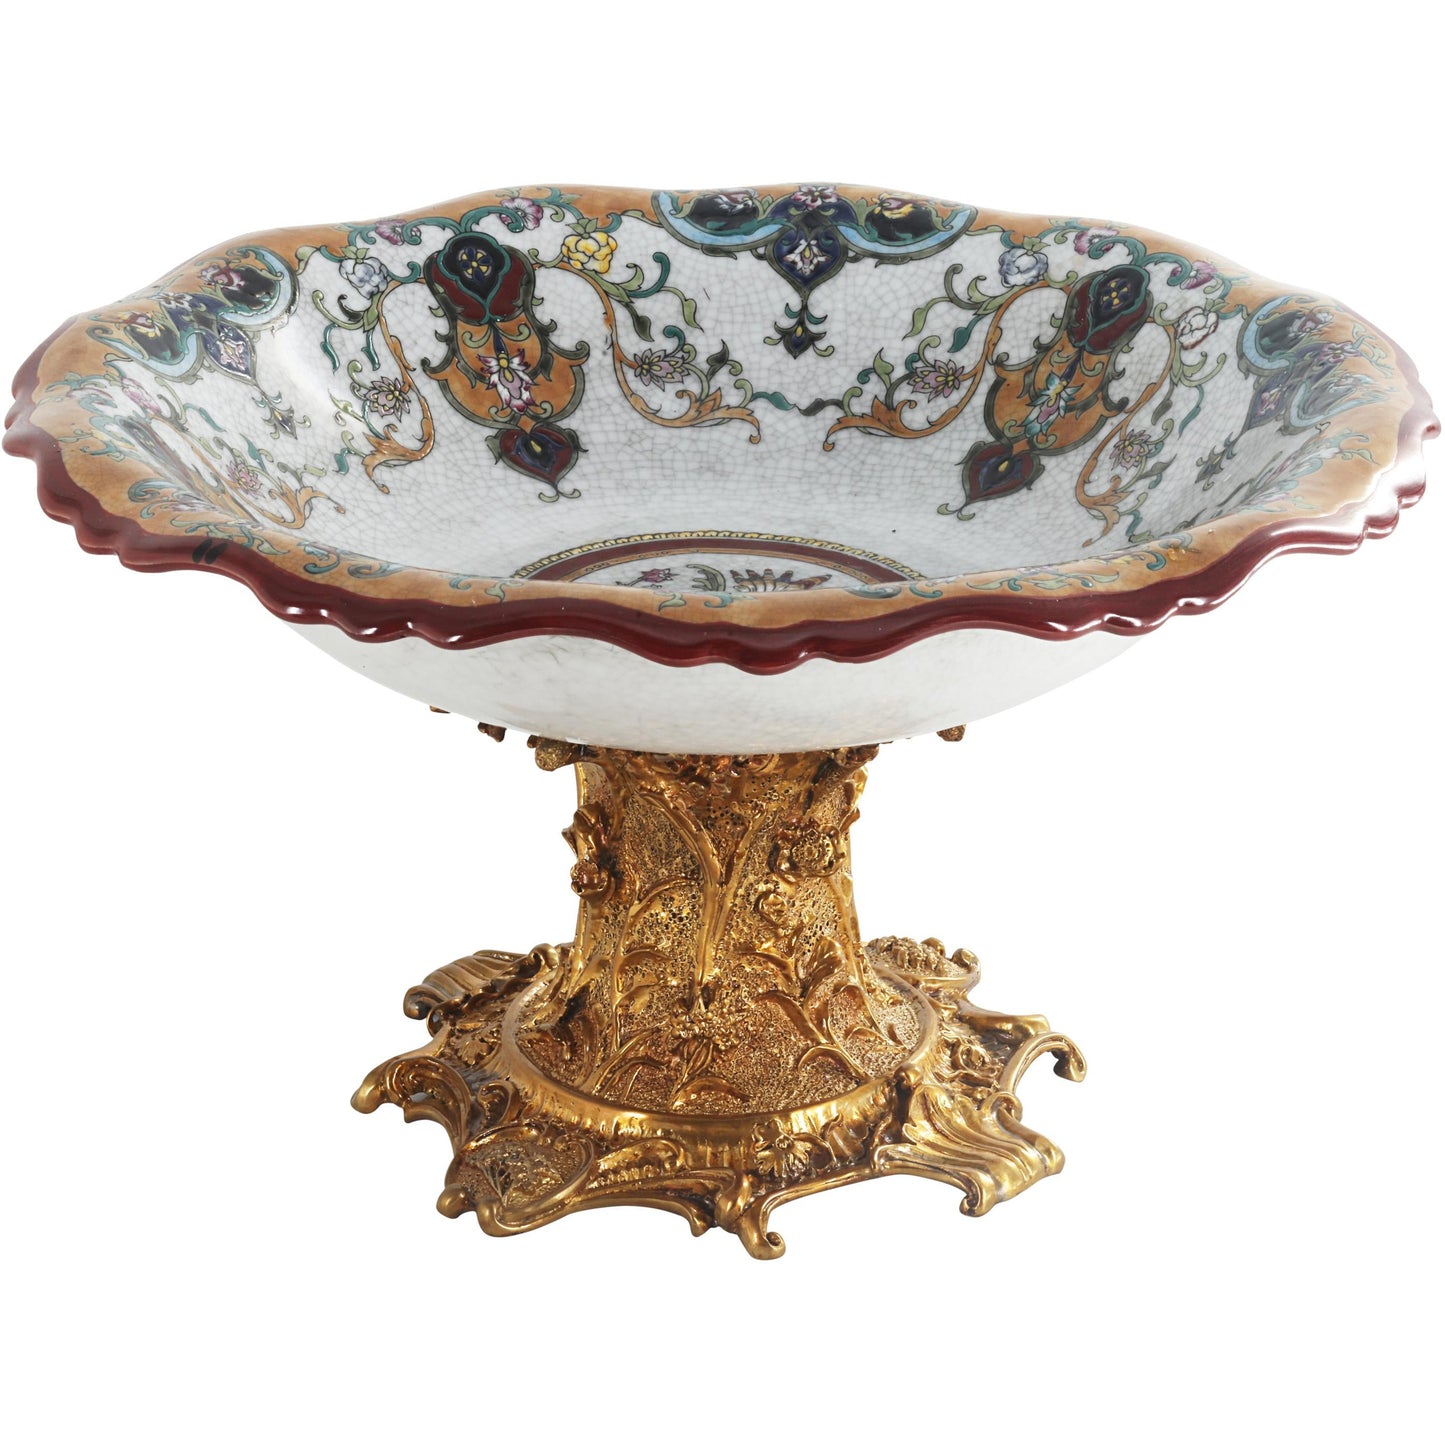 Hand-painted Porcelain and Bronze Decorative Fruit Bowl